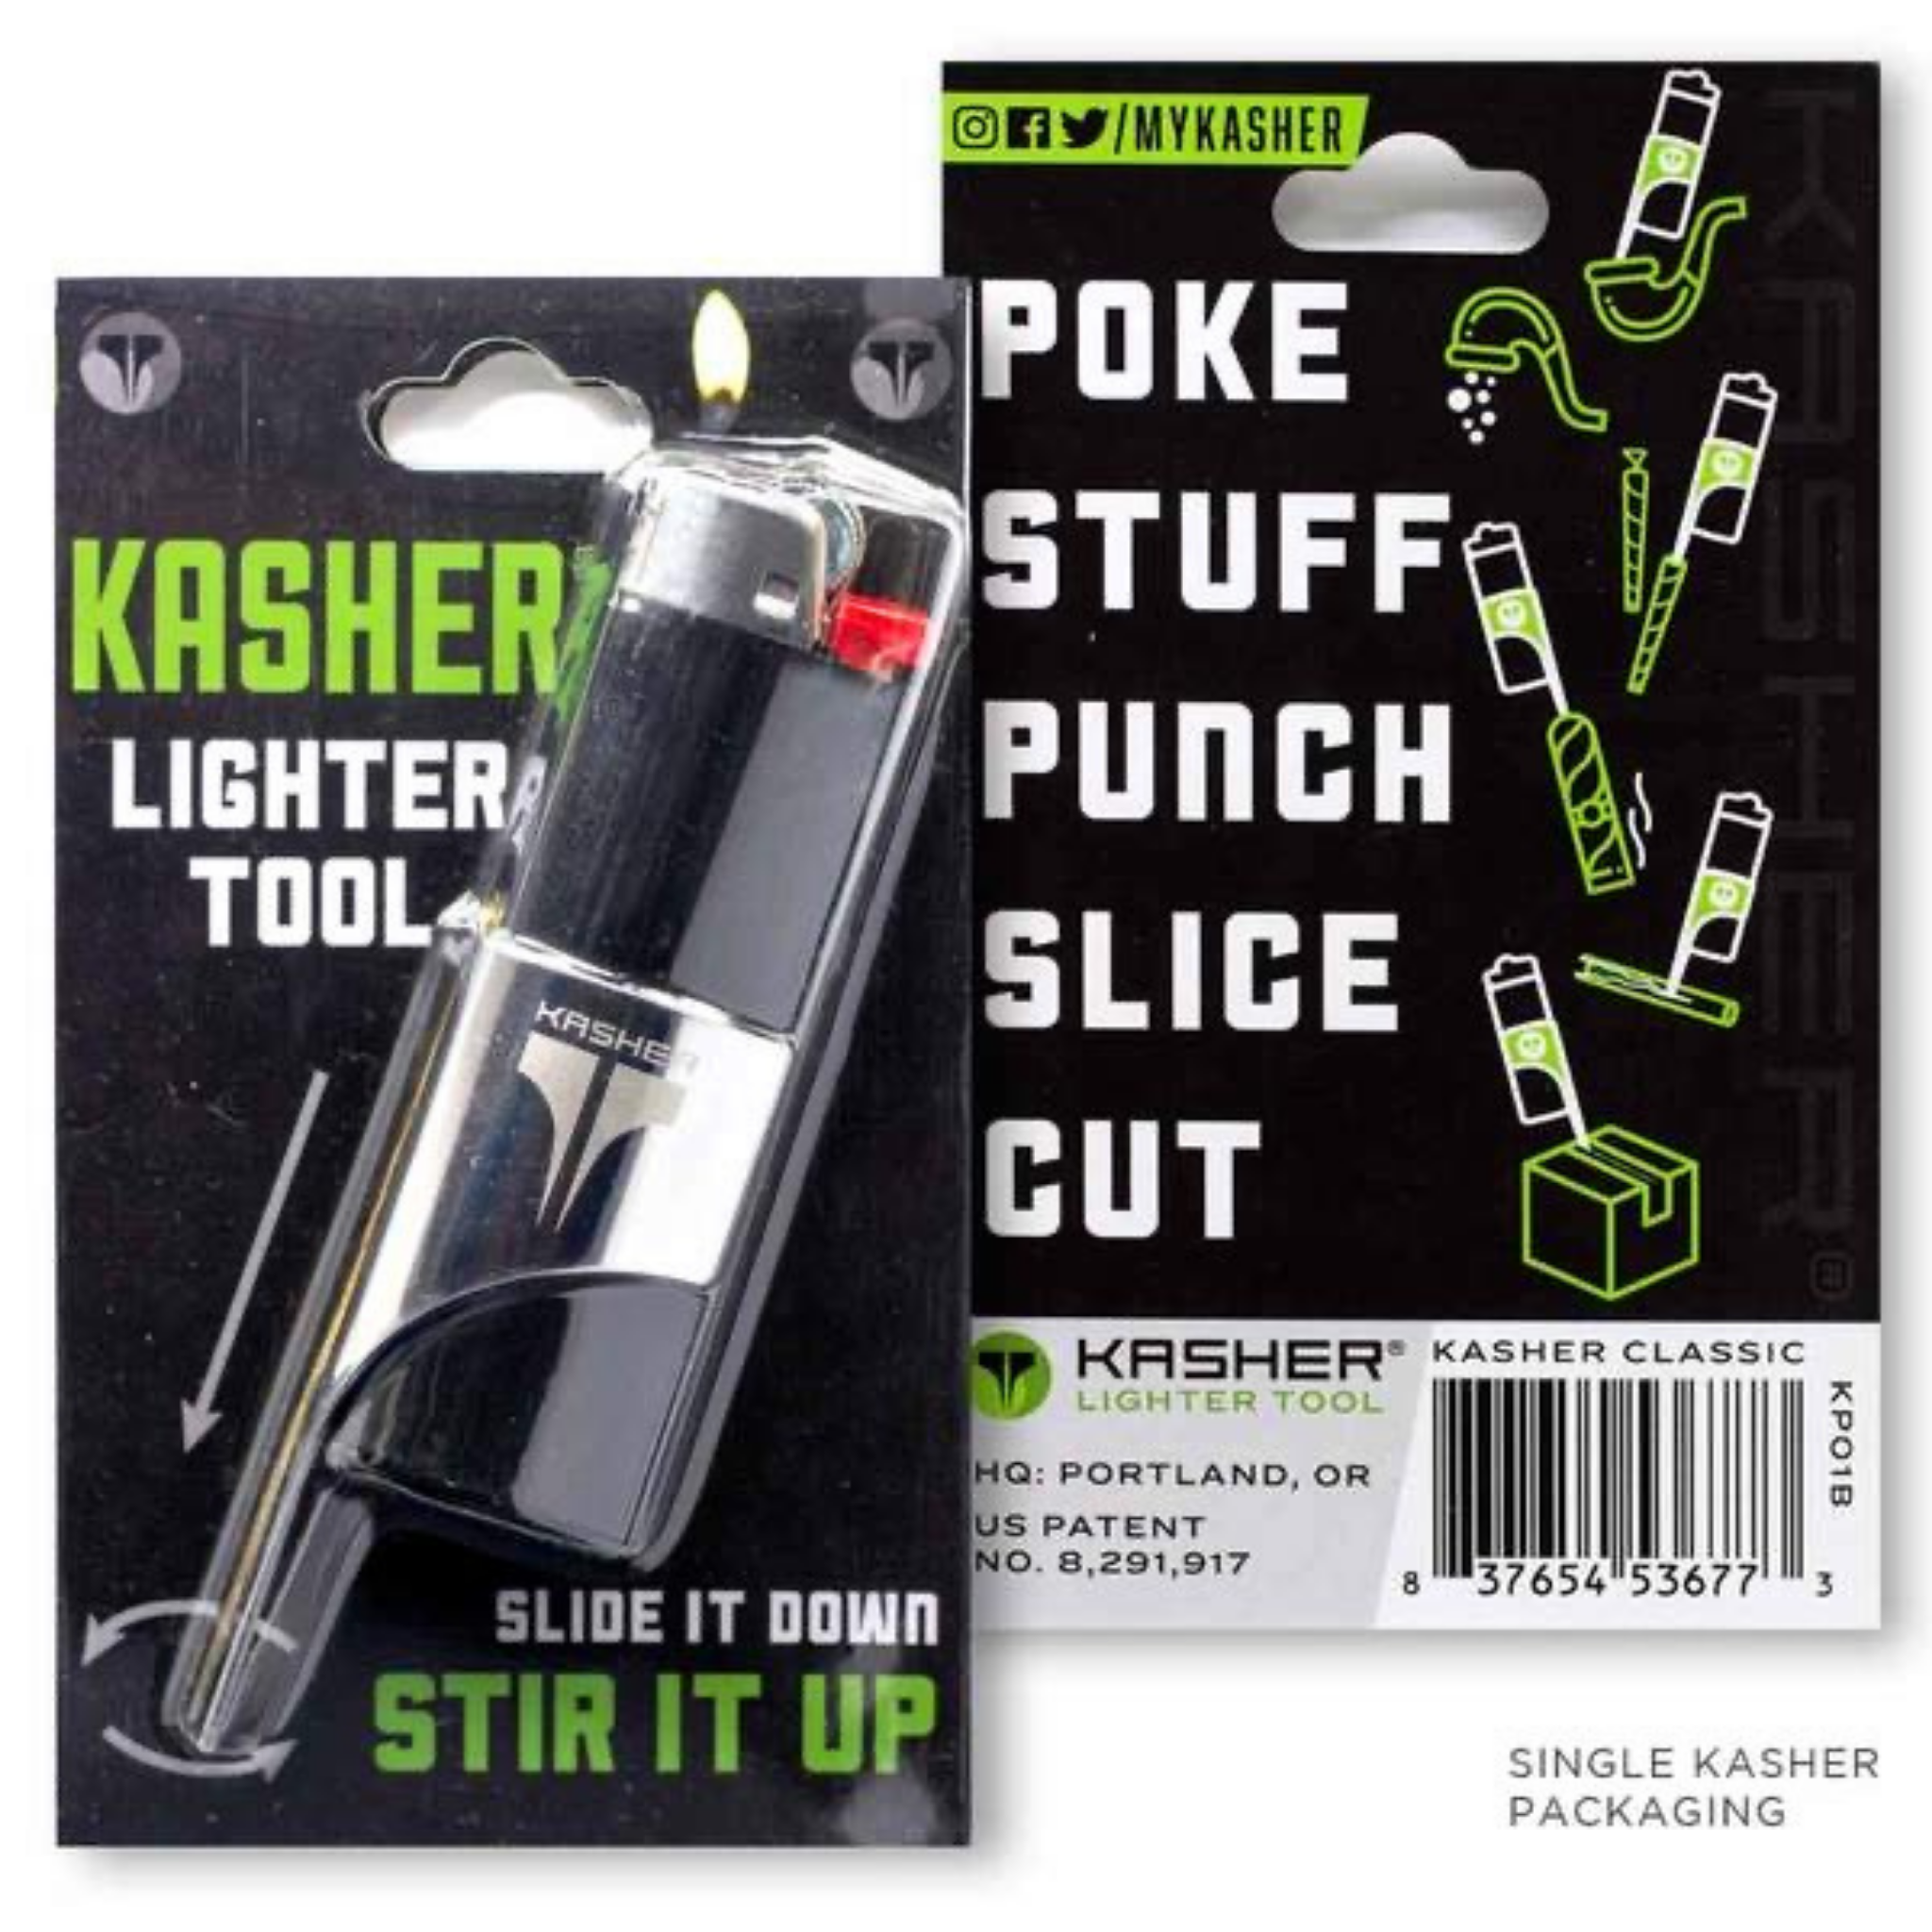 Kasher & lighter